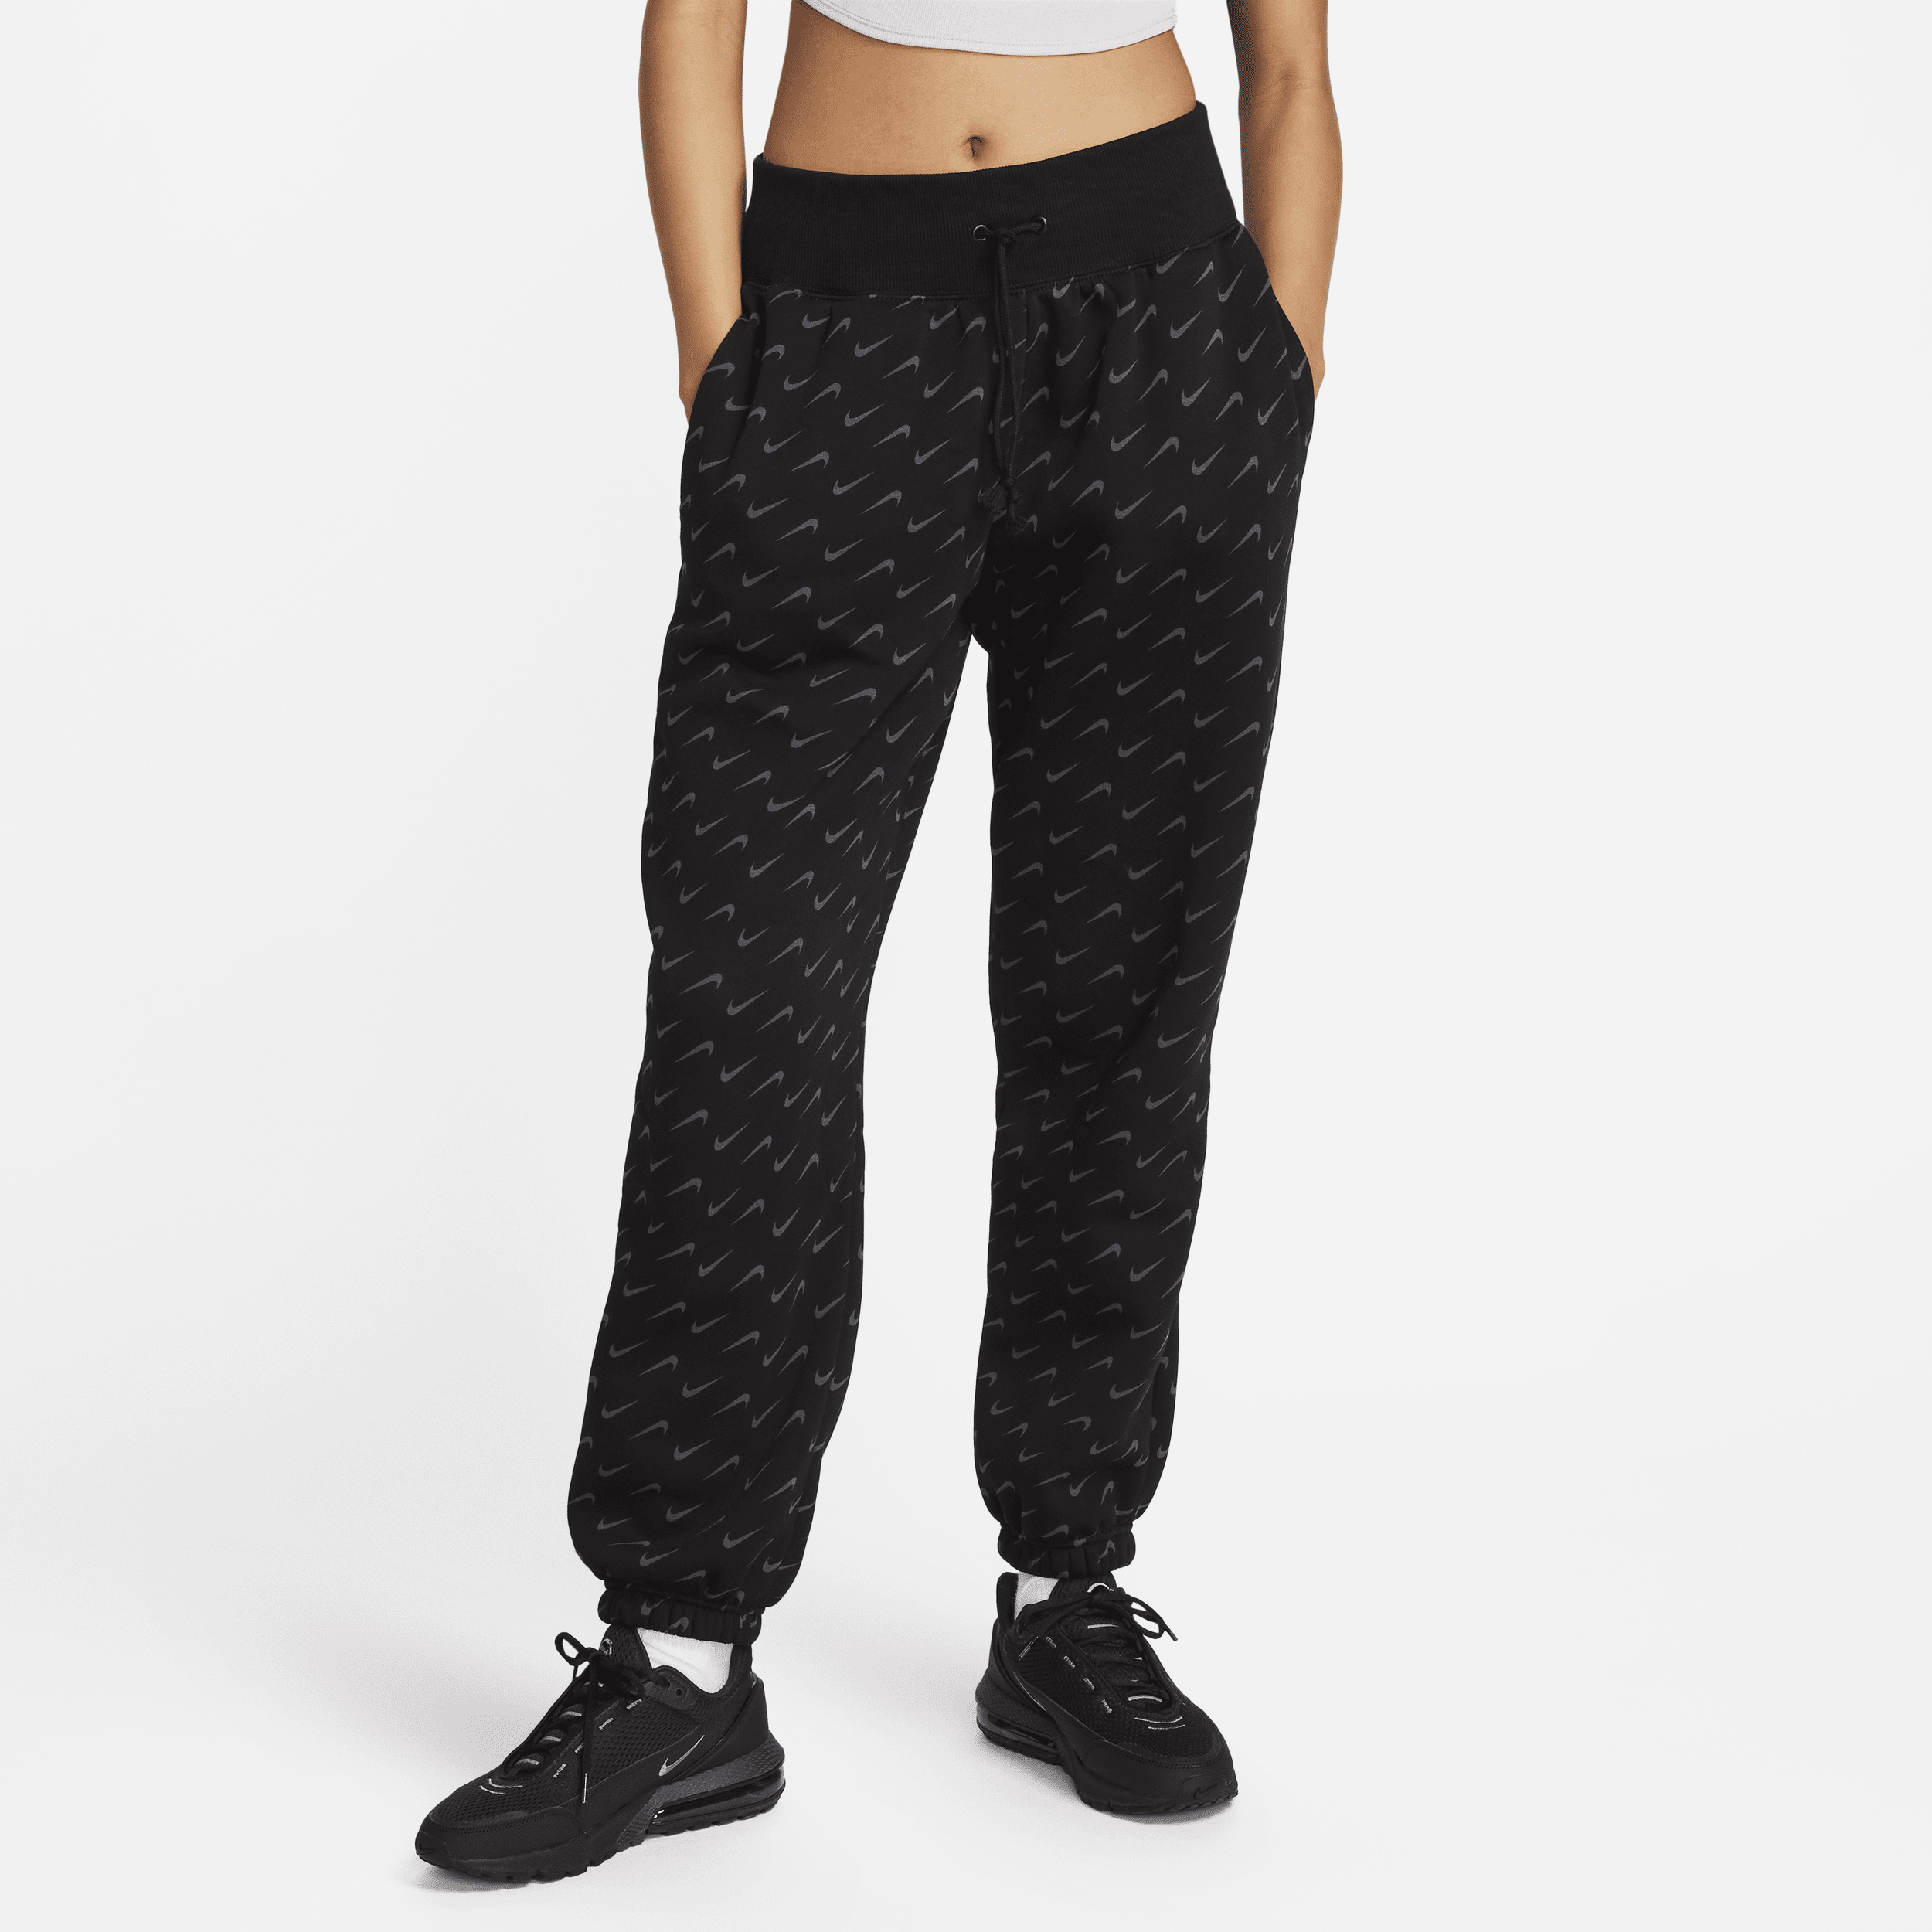 Oversized Nike Sportswear Phoenix-sweatpants i fleece med print til kvinder - sort